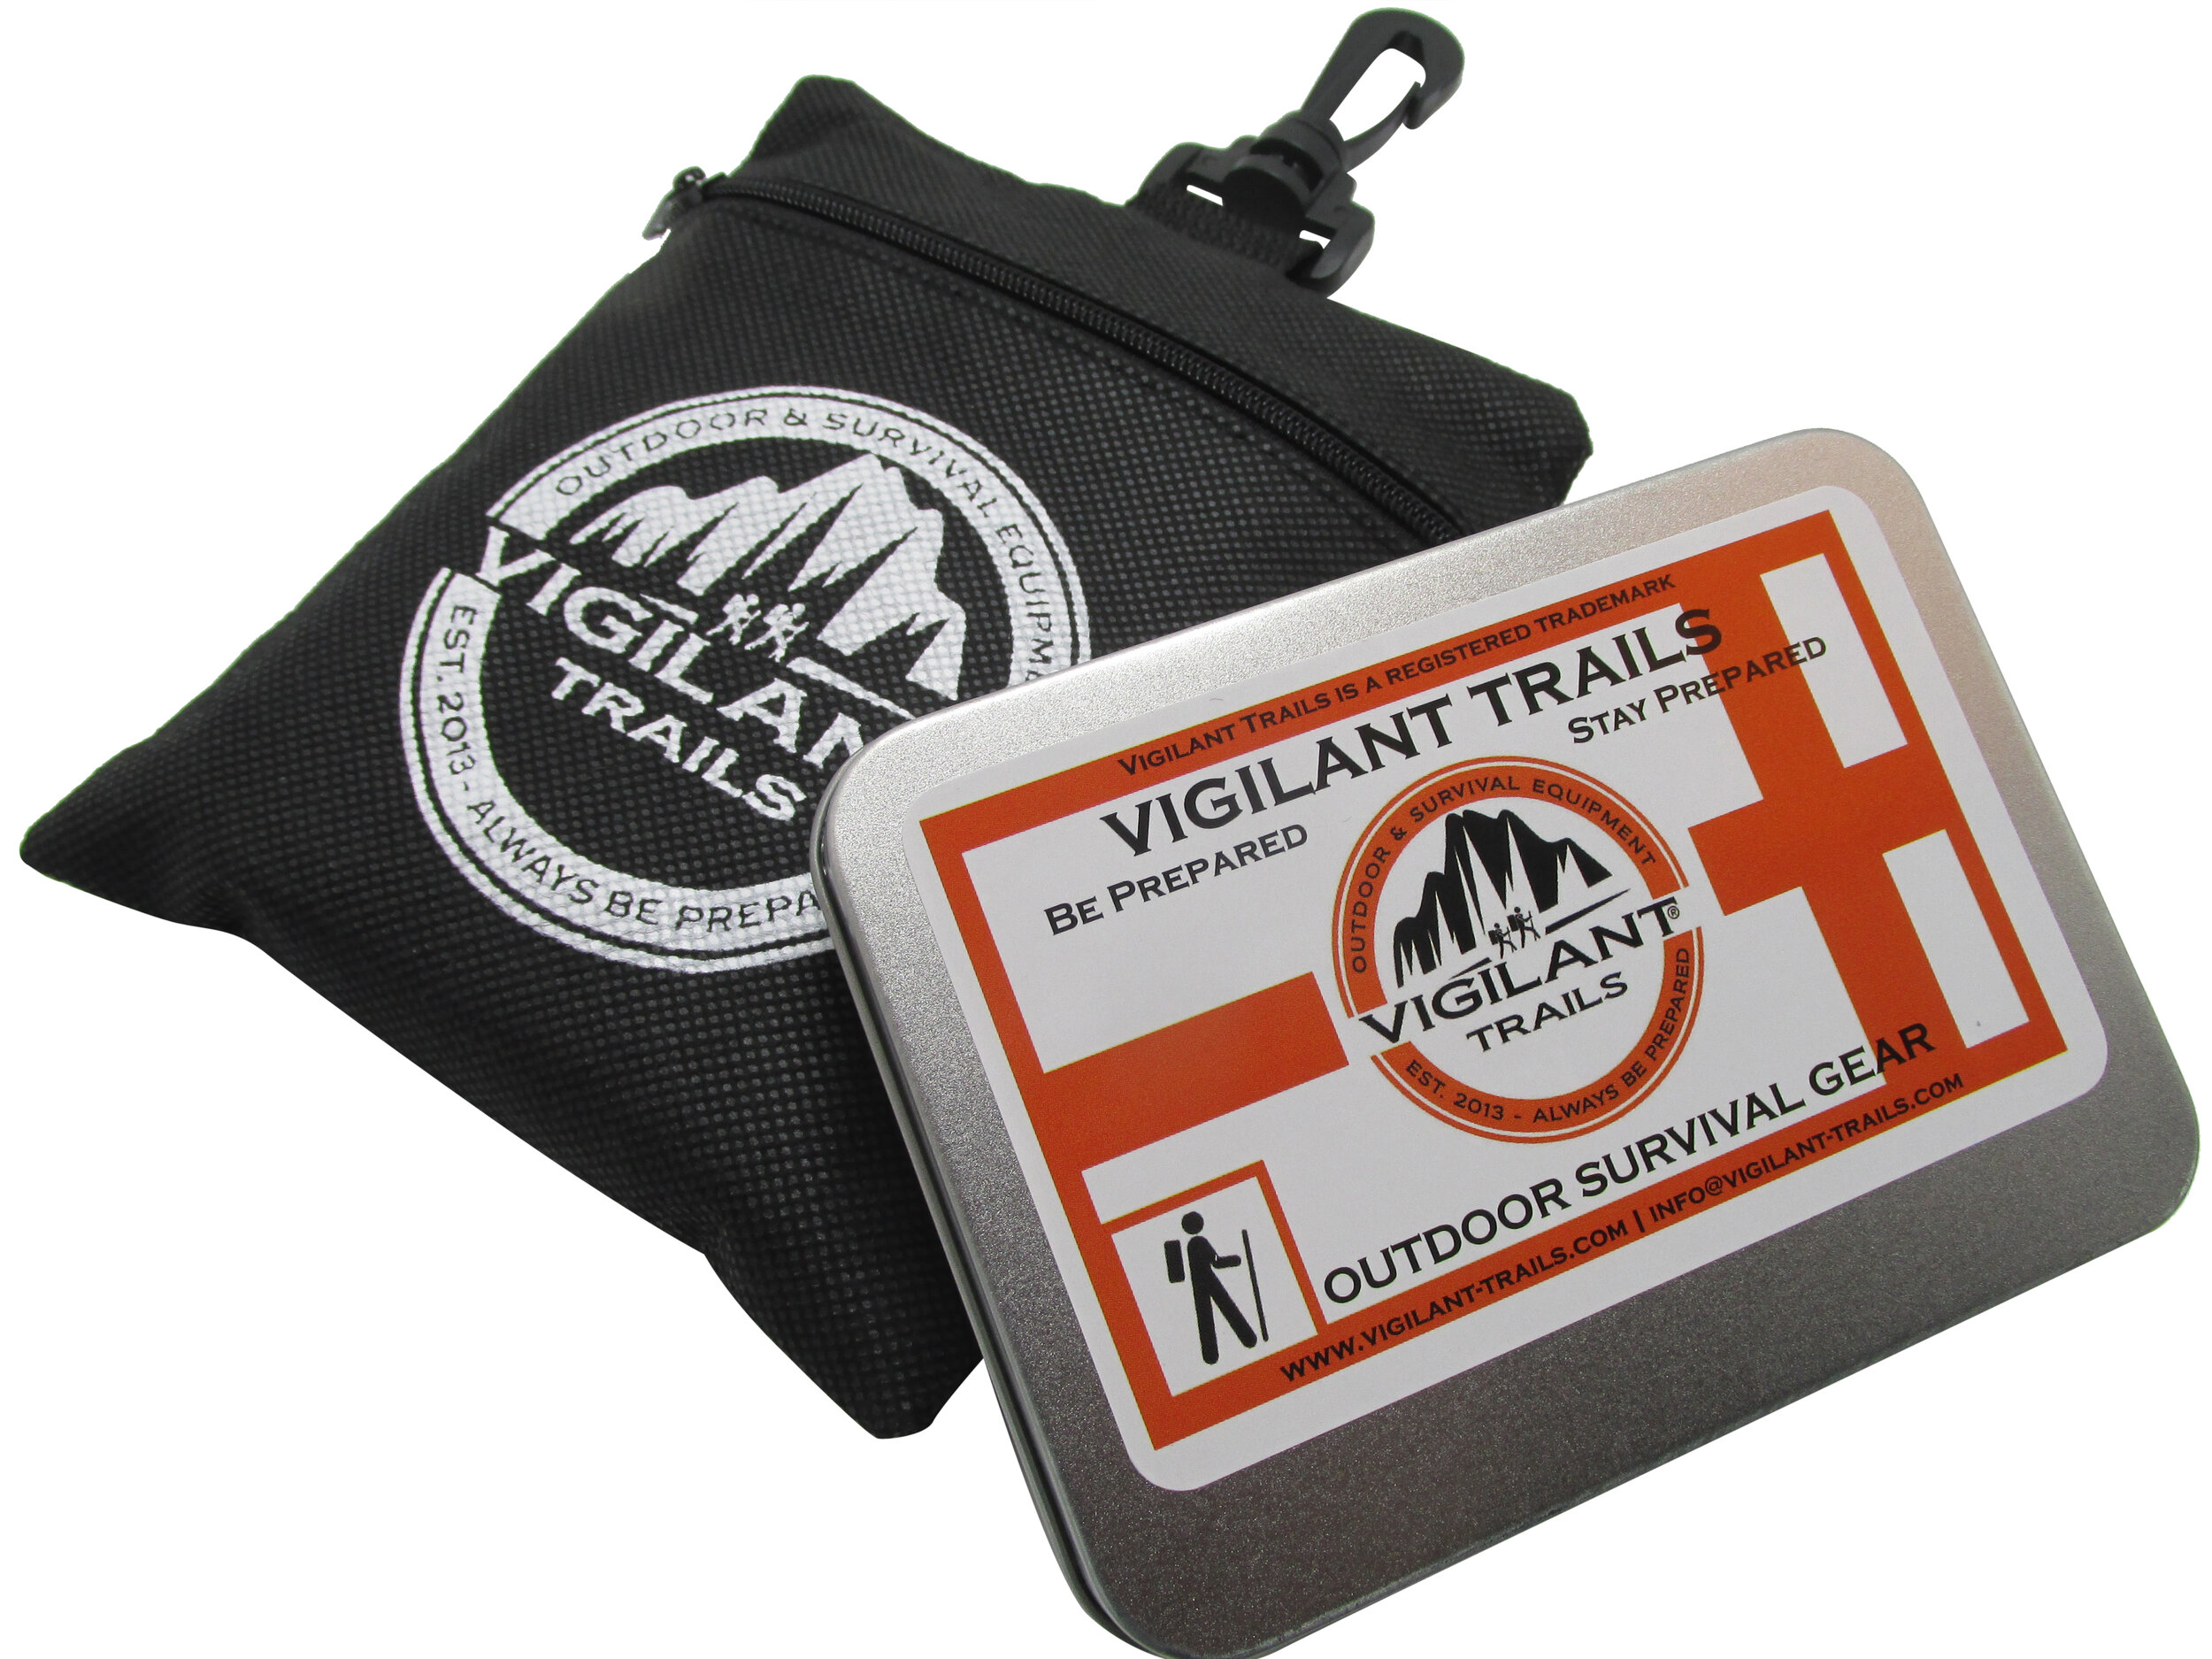 Vigilant Trails Pre-Packed Survival Mess Kit  Stage-2. Folding Stove,  Fuel, Folding Spork, Fork, Lock Back Knife, Can Opener in Carry Case —  Vigilant Trails